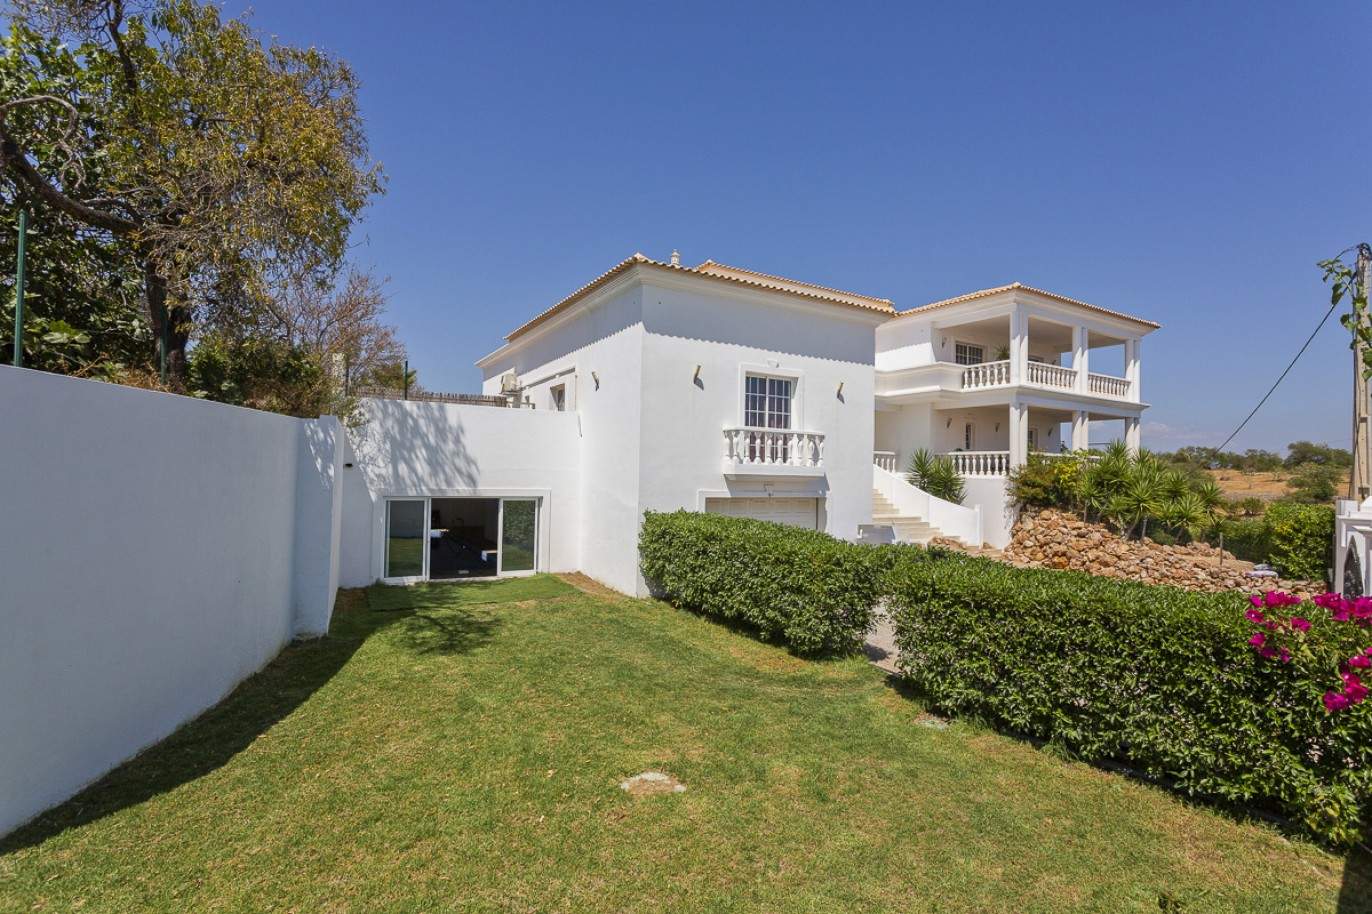 4 Bedroom Villa with sea view, for sale in Boliqueime, Algarve_209961